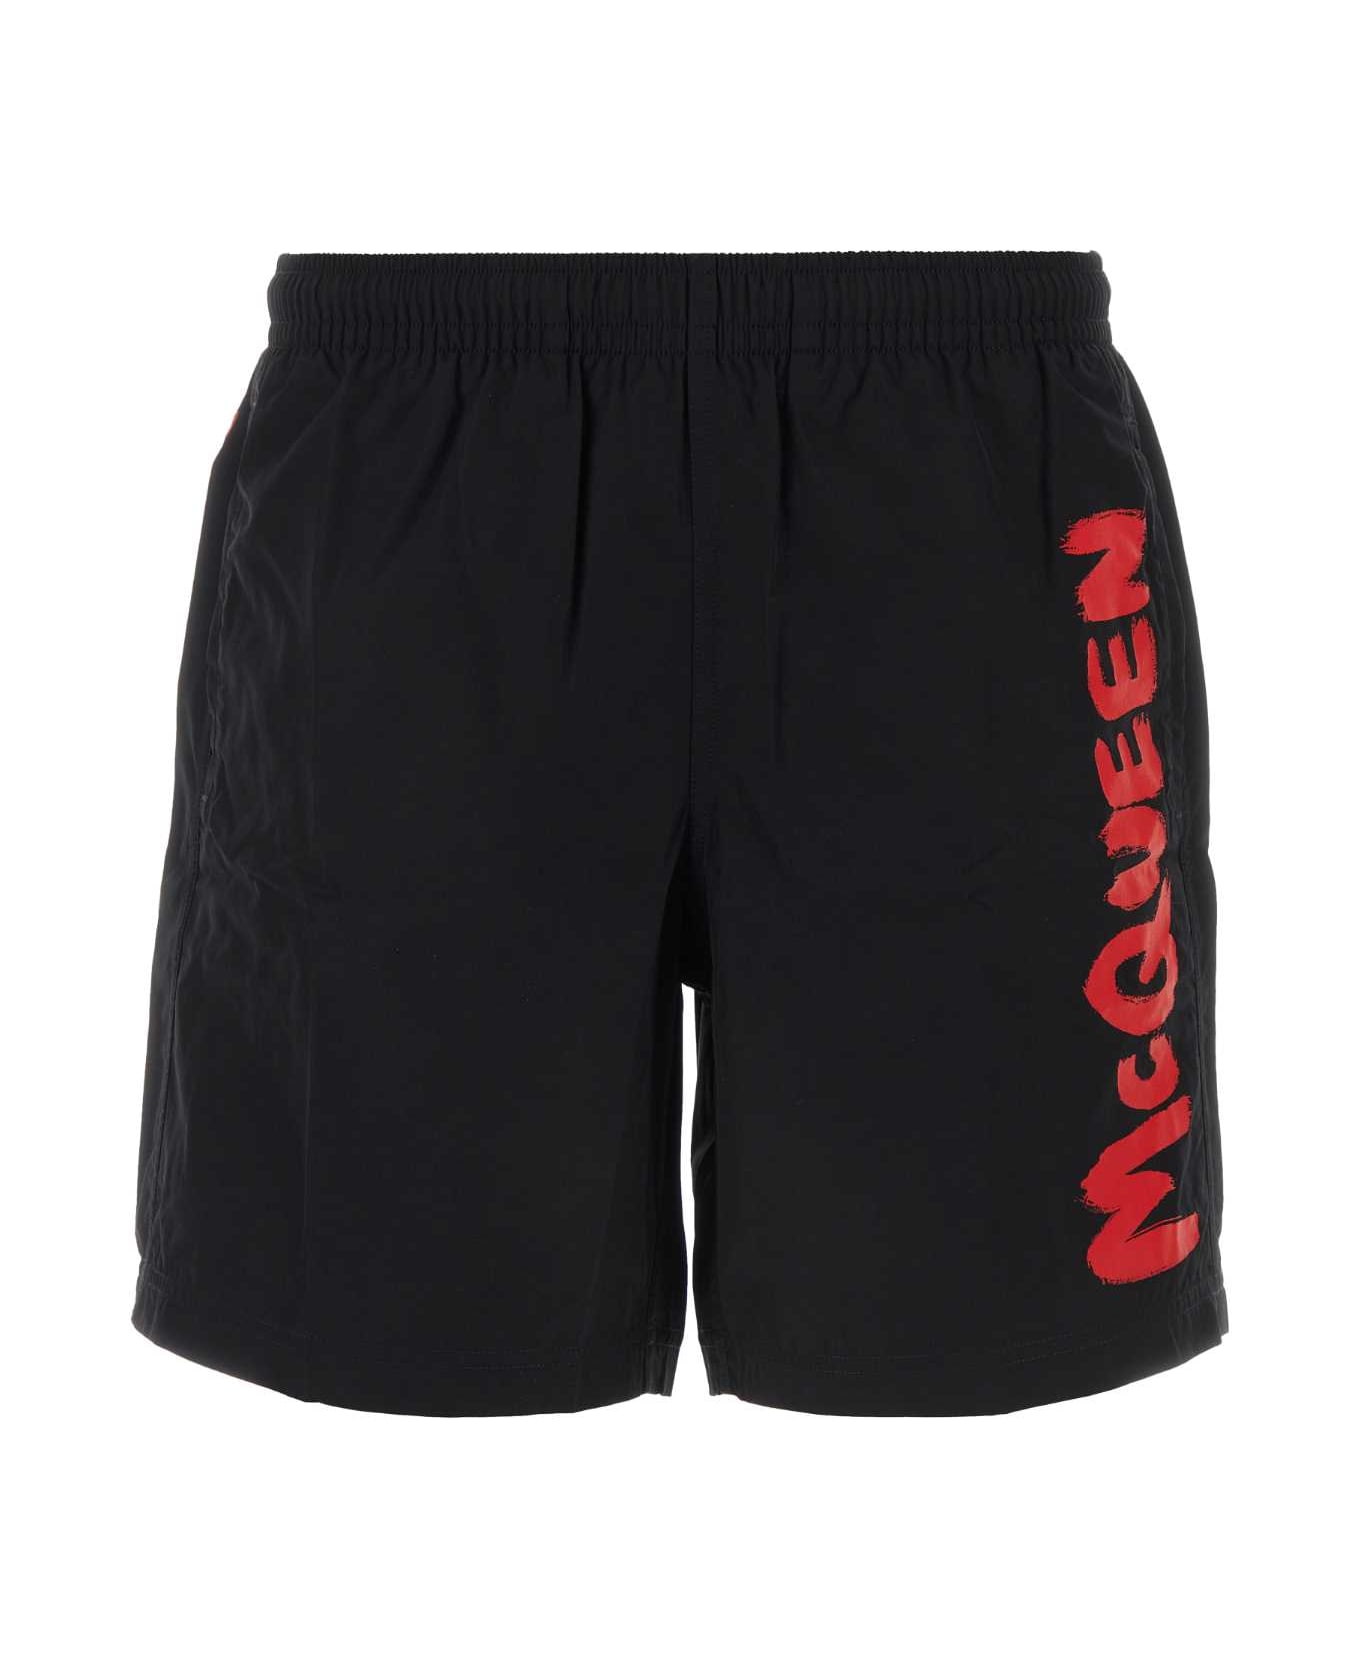 Alexander McQueen Black Nylon Swimming Shorts - BLACKLUSTRED